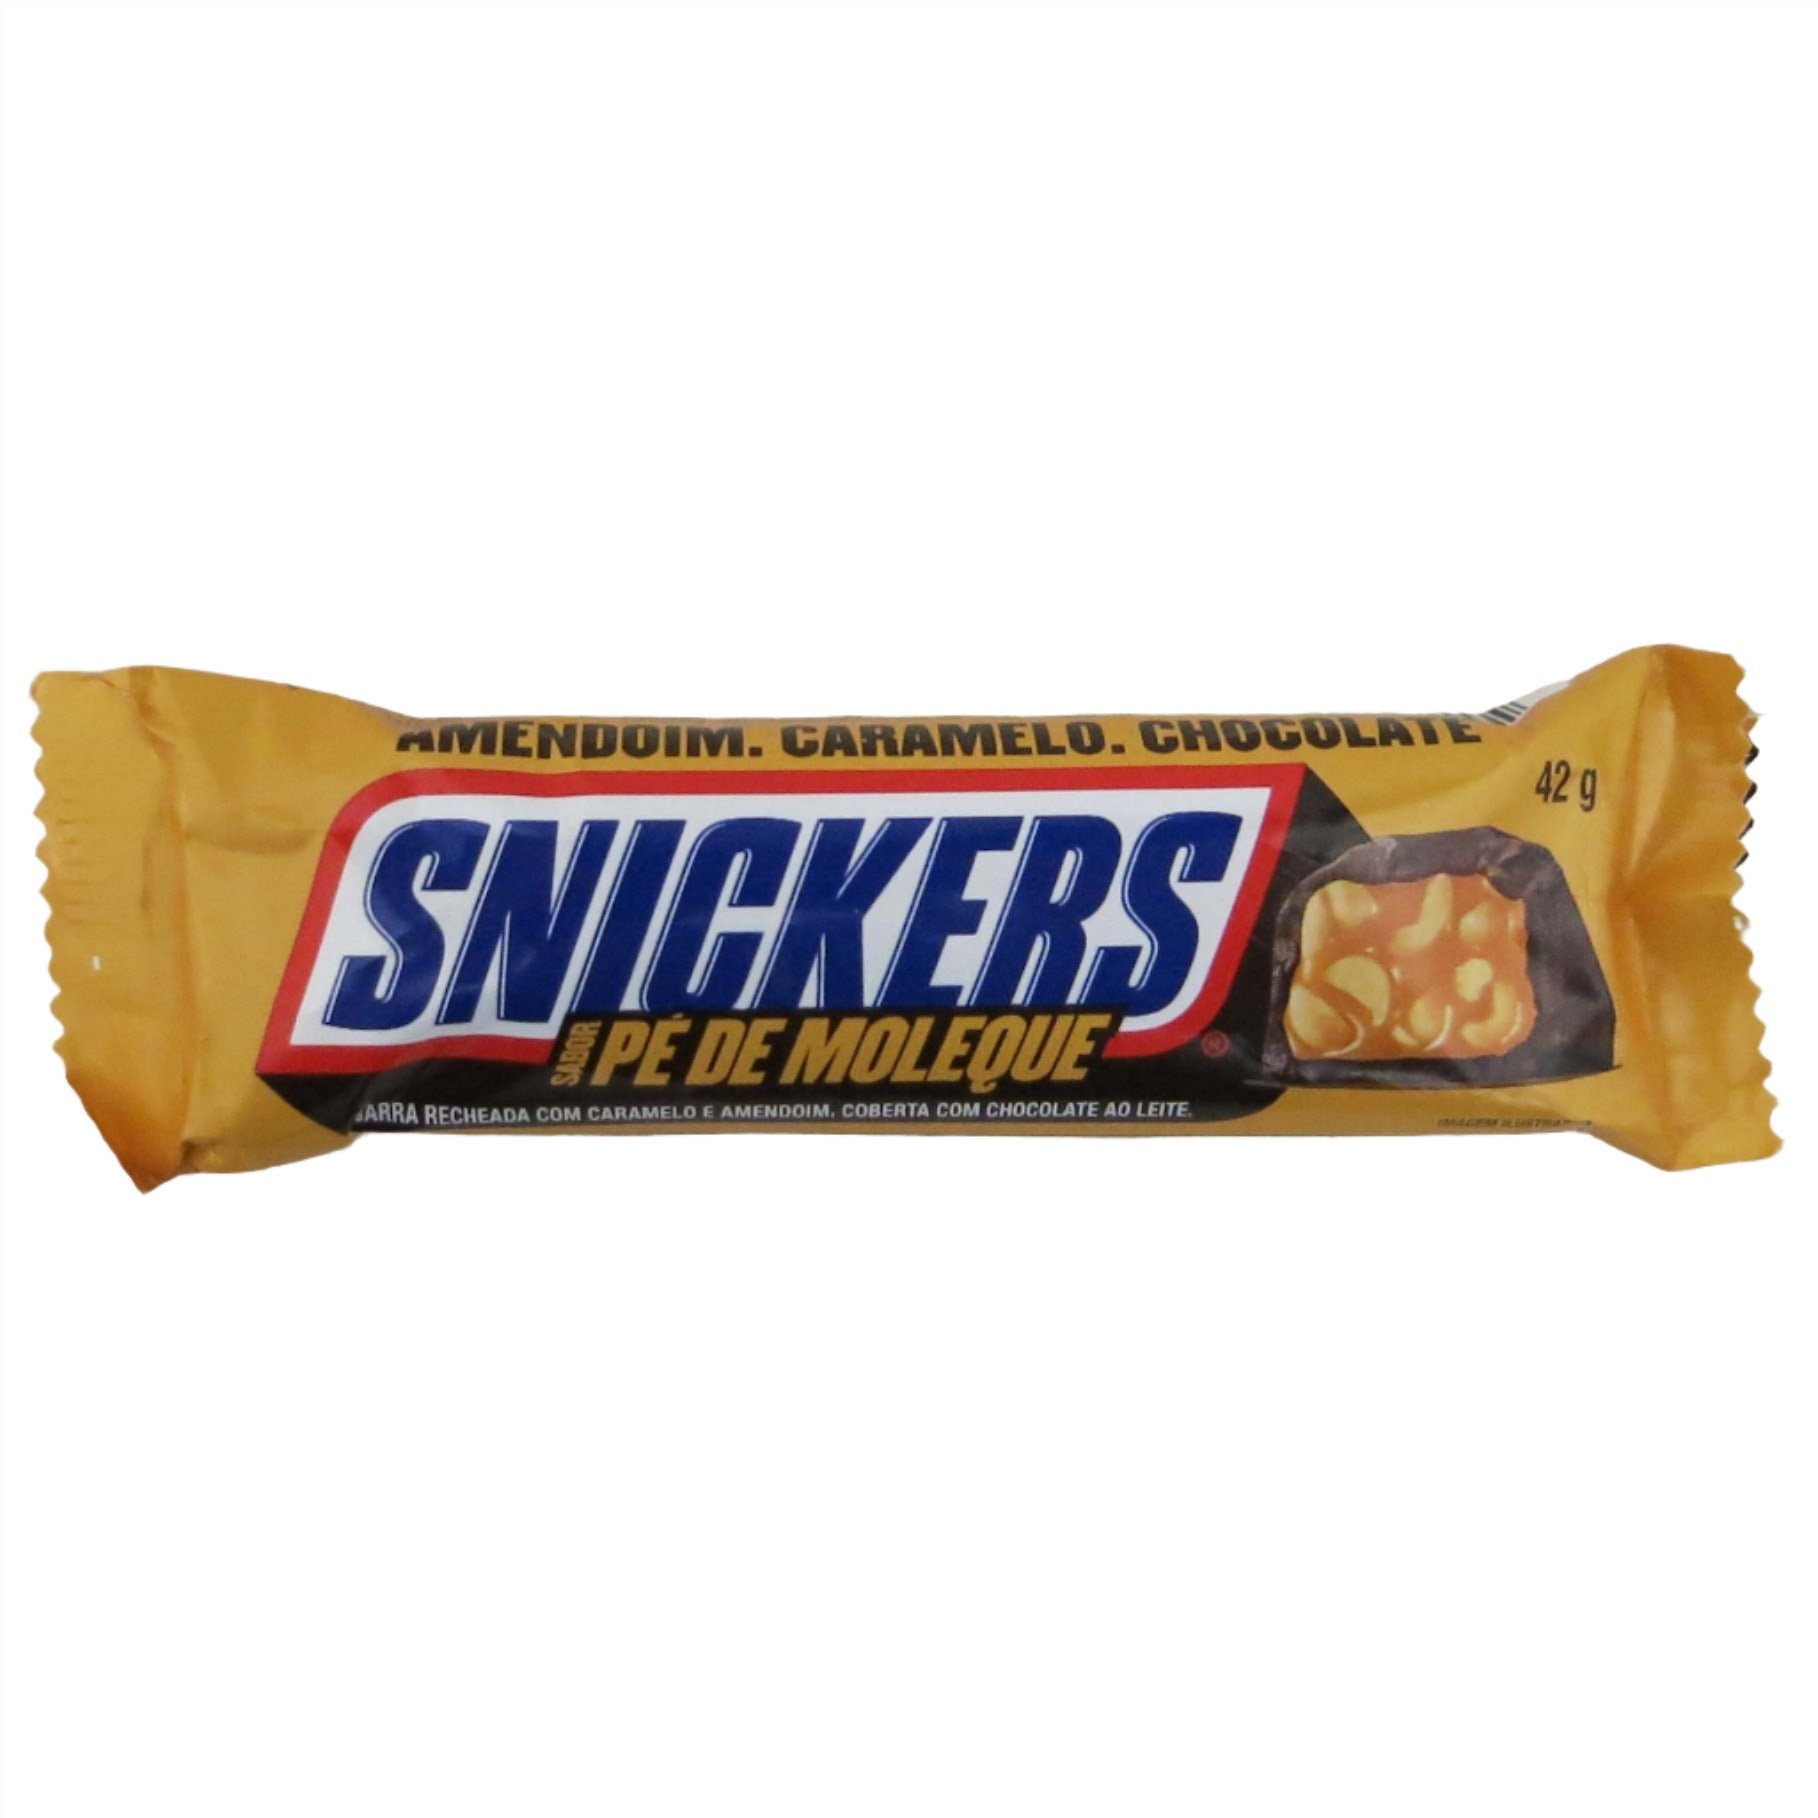 Snickers Pe de Moleque 42g (BR) - Worldster Markt e.K.